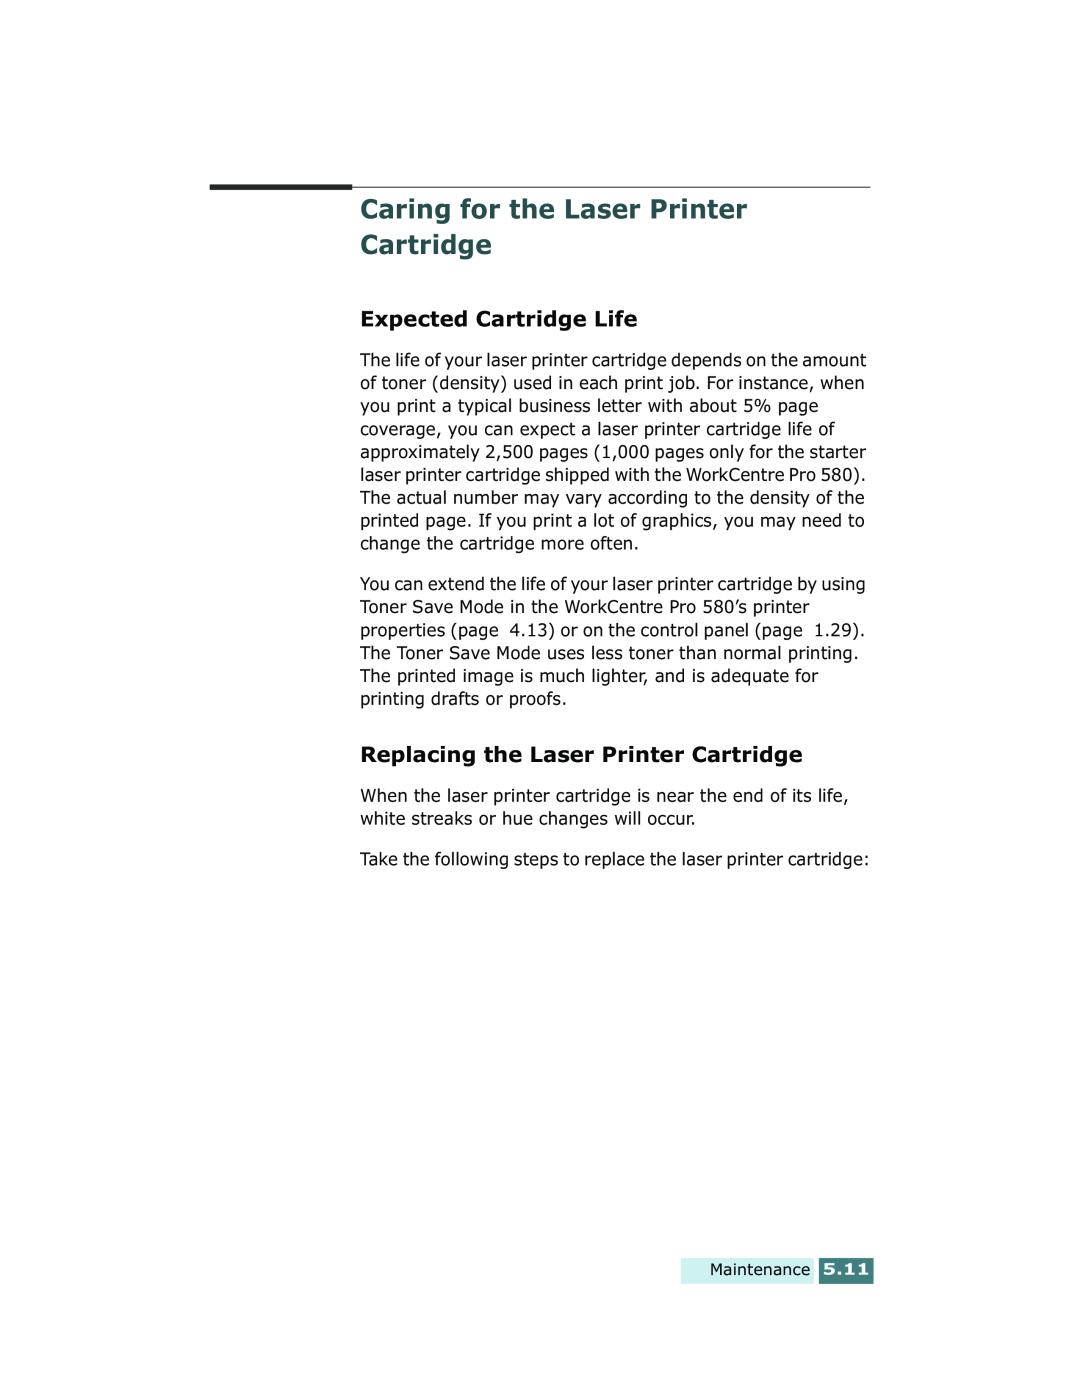 Xerox Pro 580 manual Caring for the Laser Printer Cartridge, Expected Cartridge Life, Replacing the Laser Printer Cartridge 